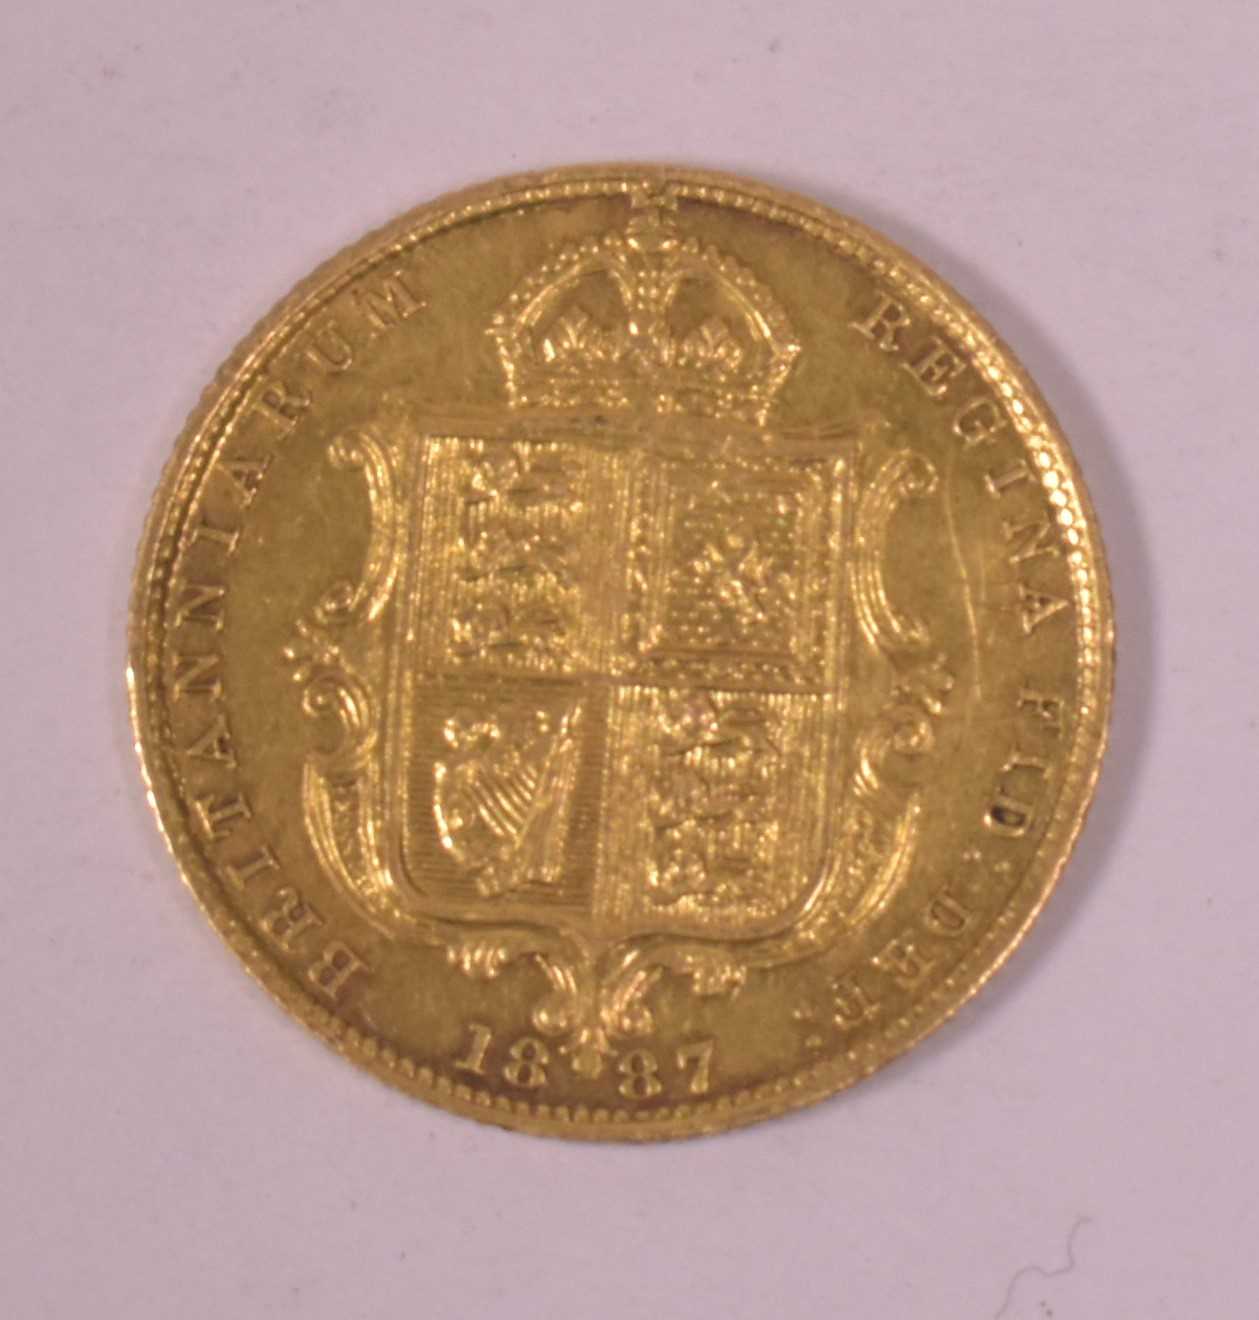 Lot 1 - Gold half sovereign